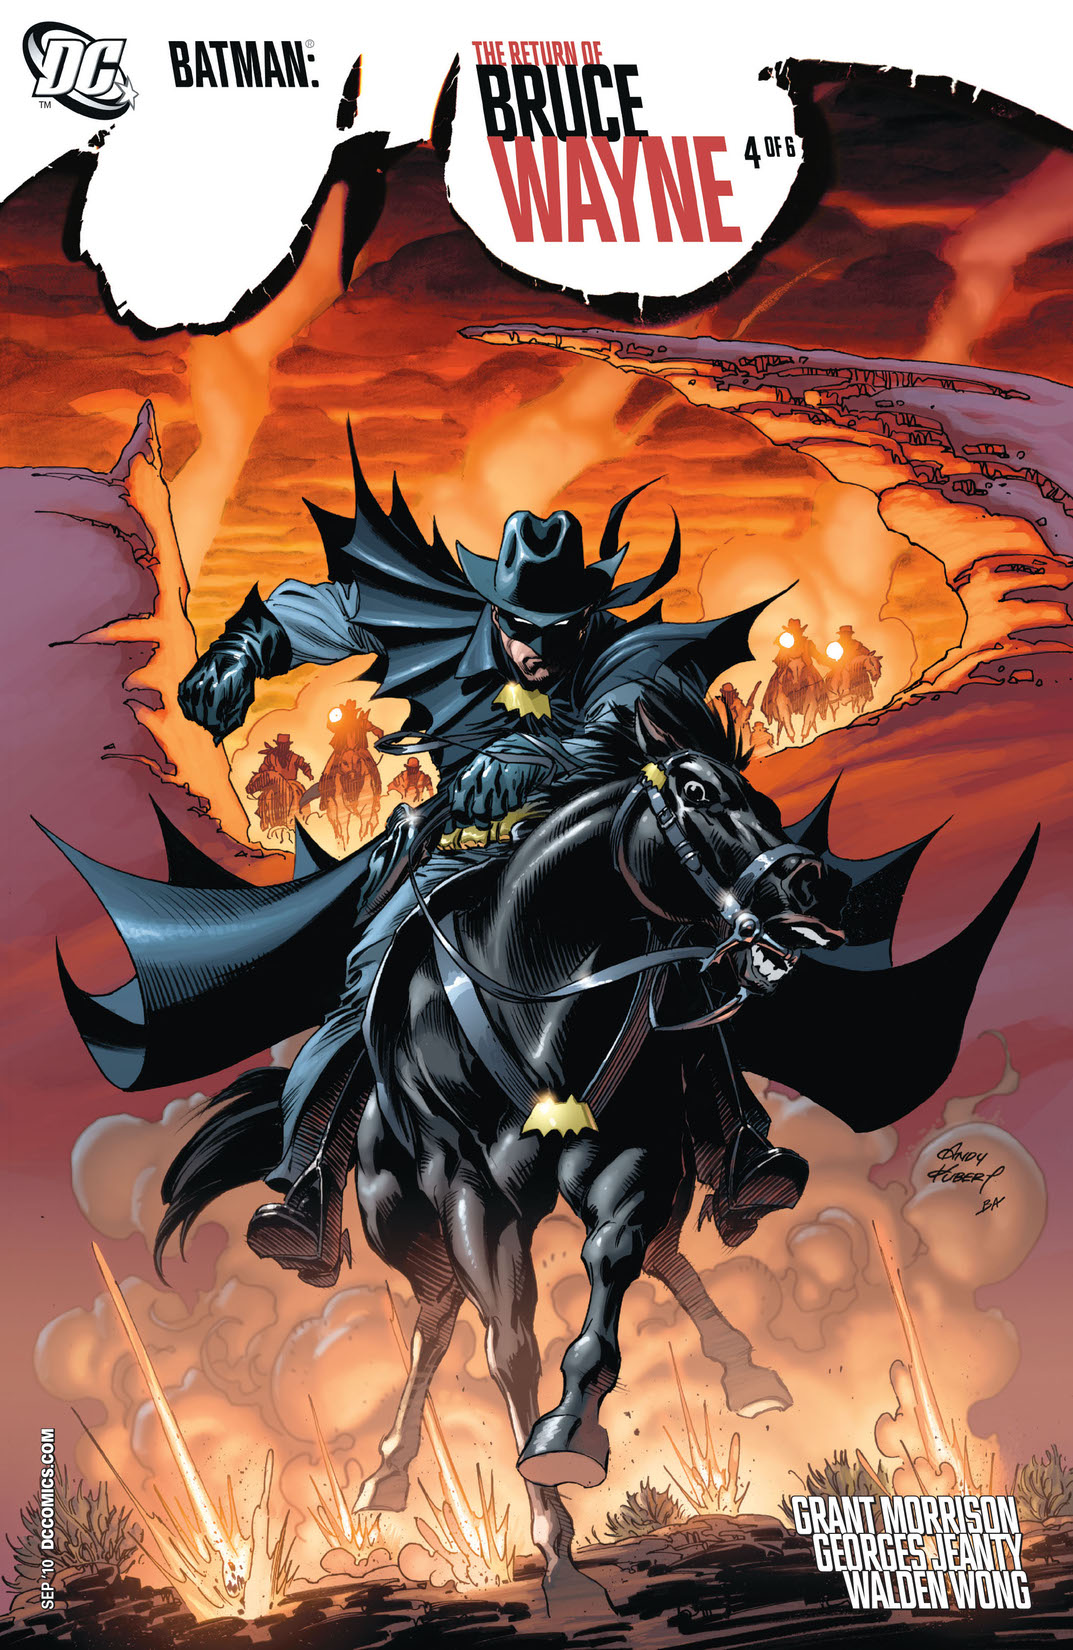 Batman: The Return of Bruce Wayne #4 preview images